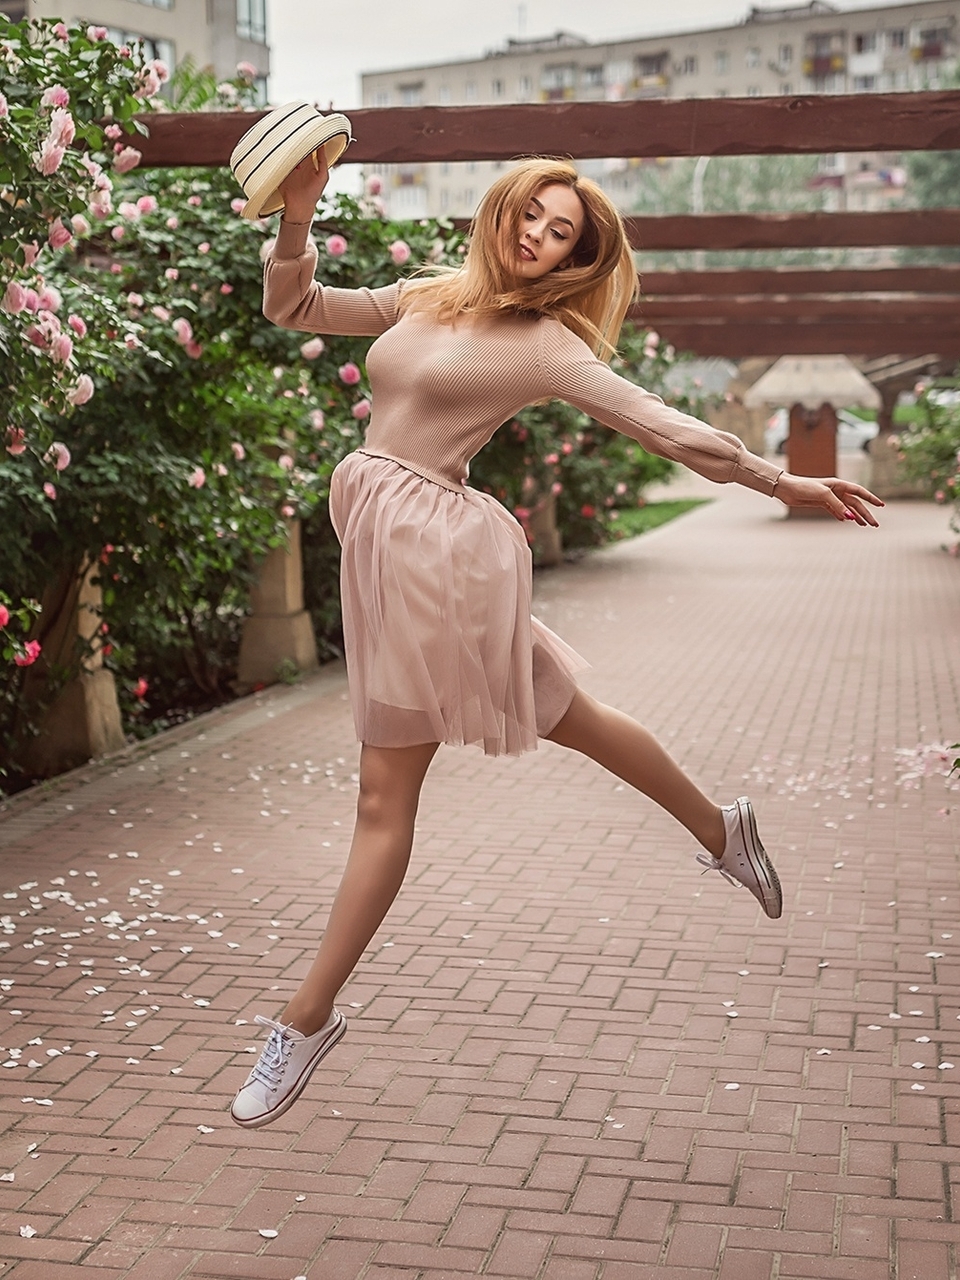 Image: Girl, pink, dress, hat, smiling, jumping, flowers, roses, shrub, garden, Christina Kardava